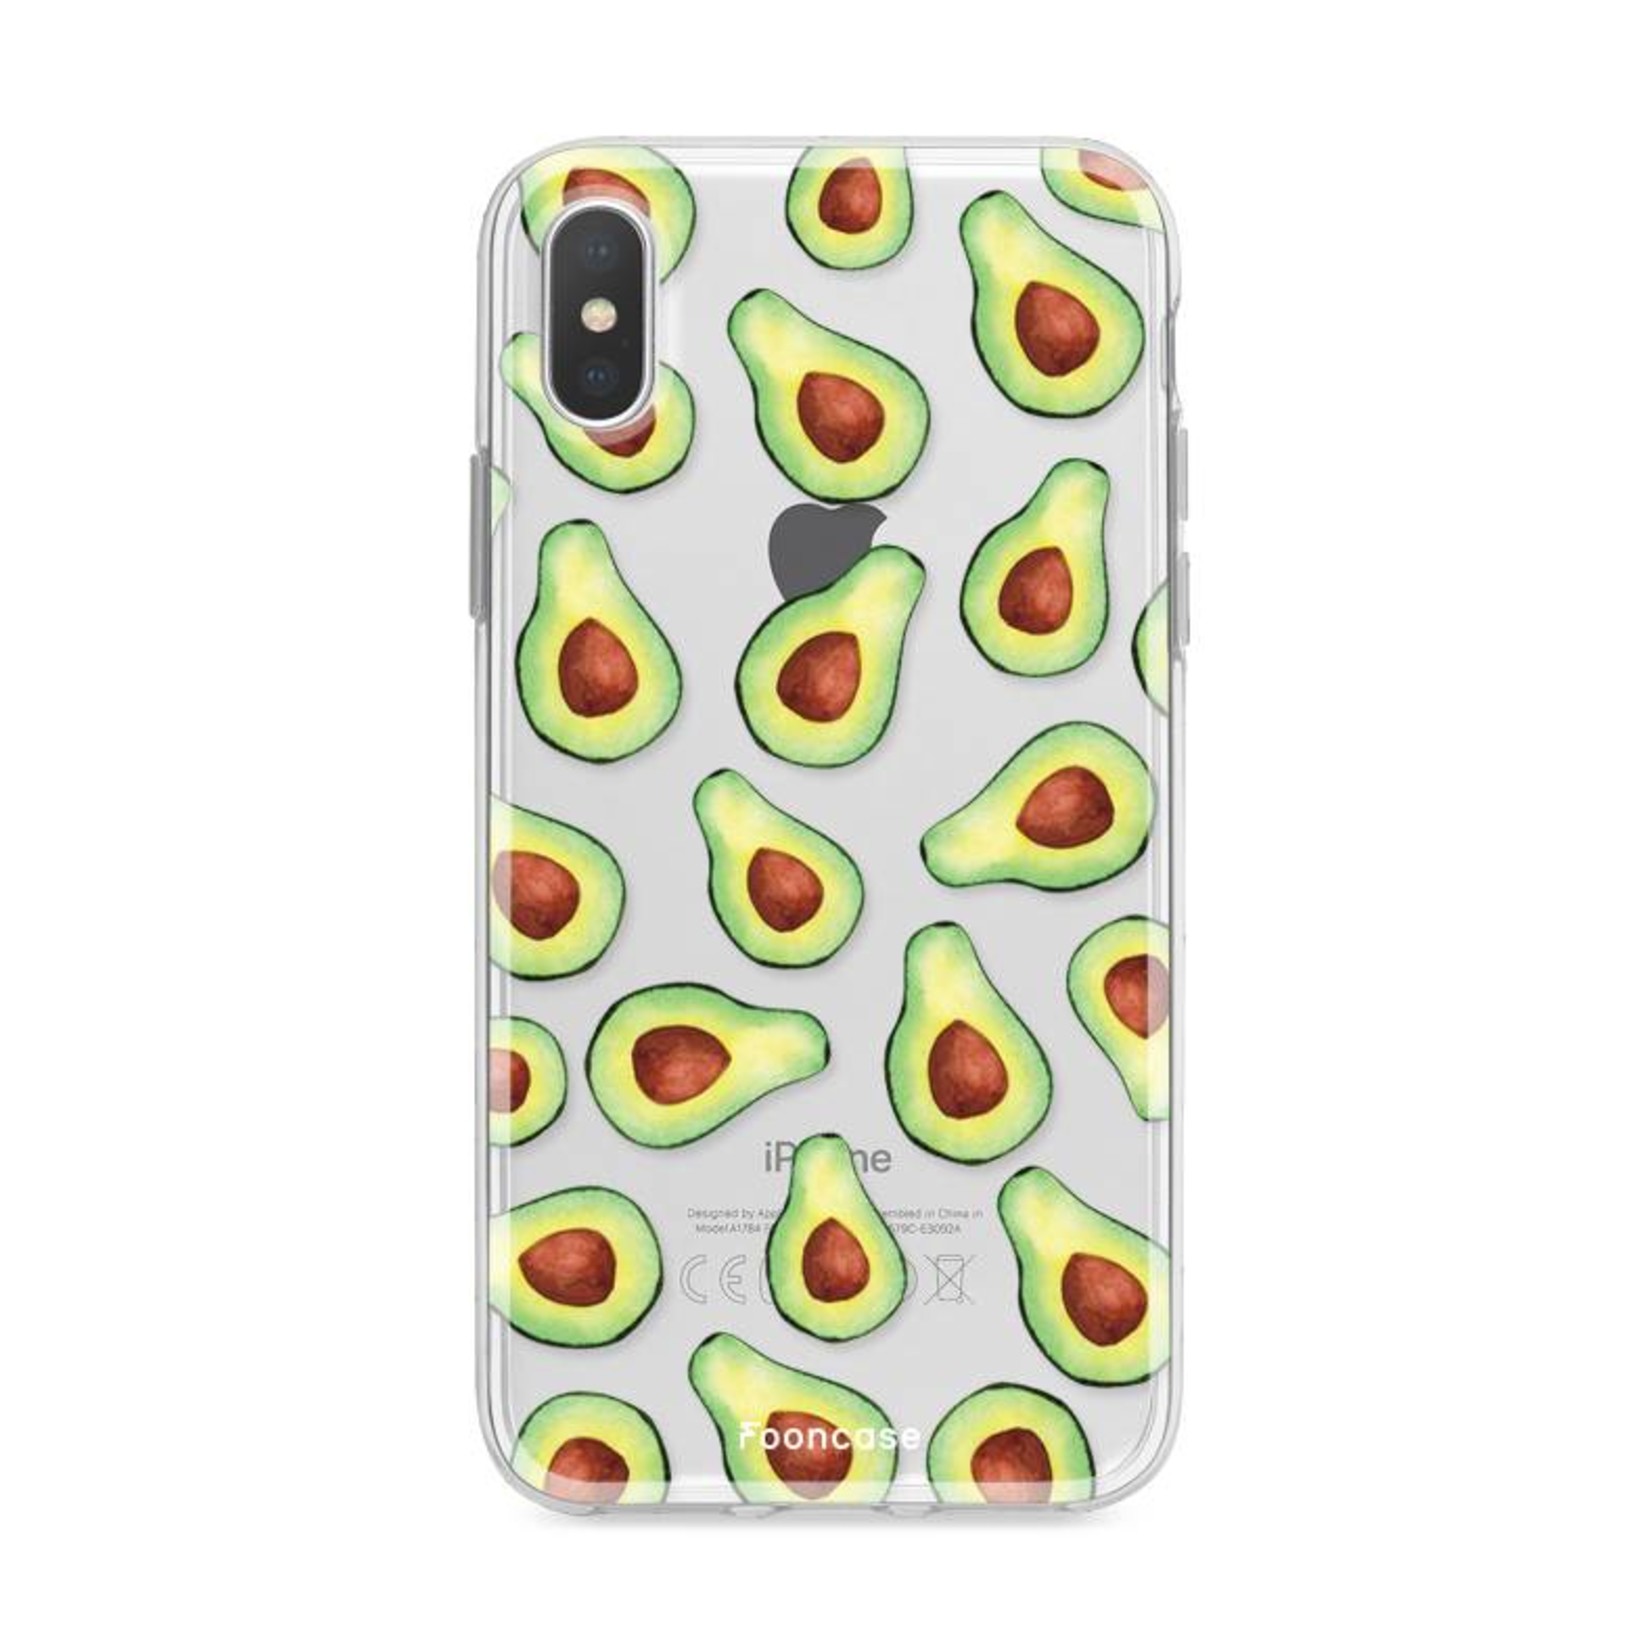 FOONCASE iPhone X hoesje TPU Soft Case - Back Cover - Avocado